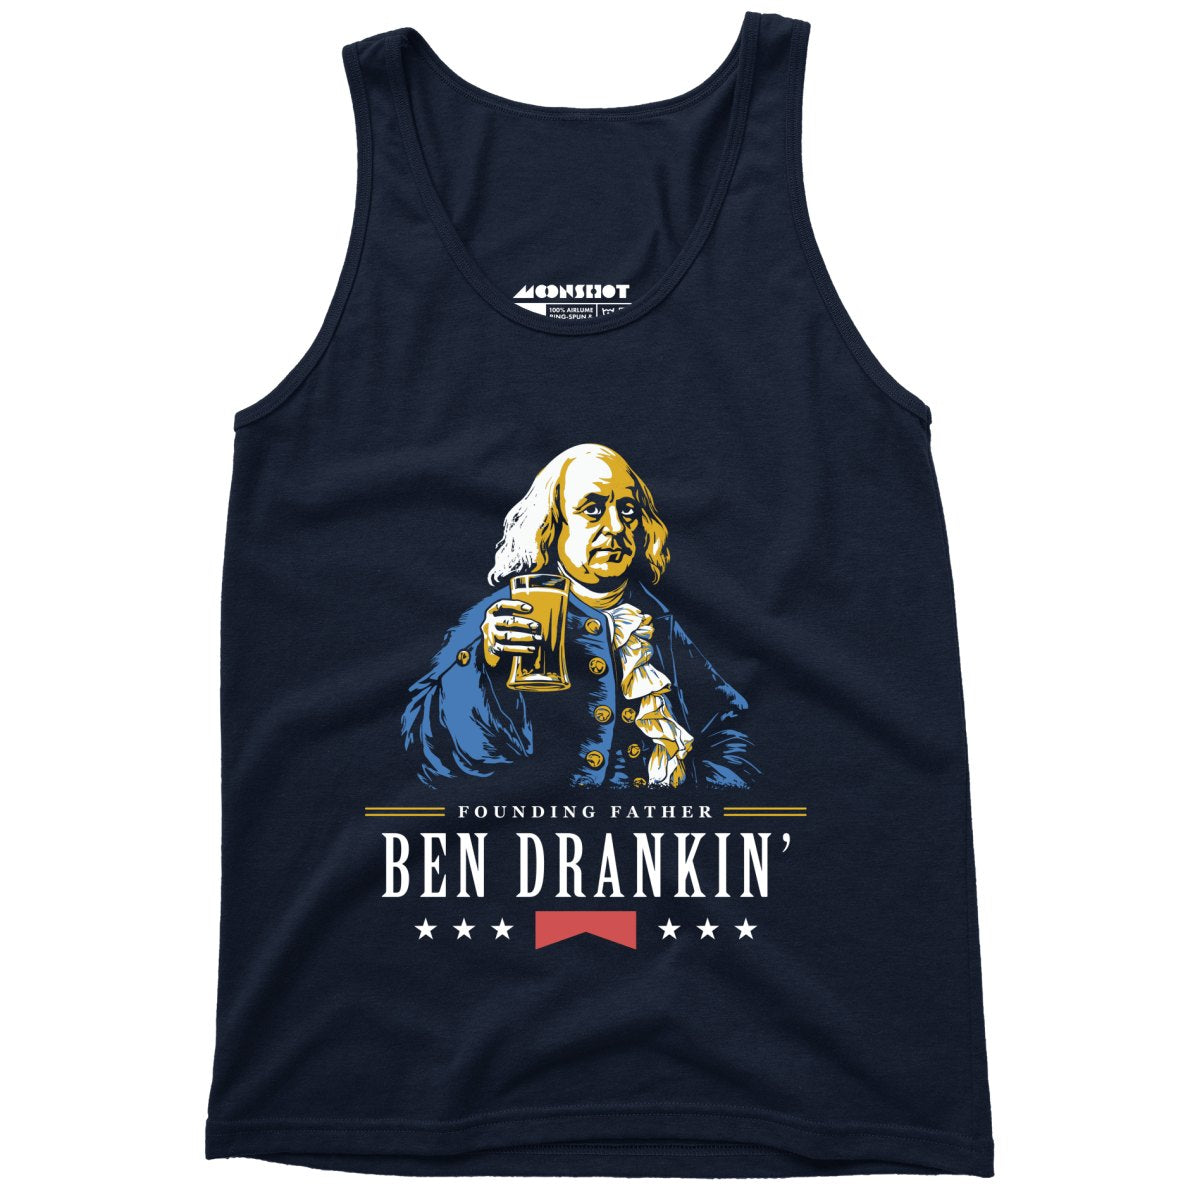 Ben Drankin' Founding Father - Unisex Tank Top